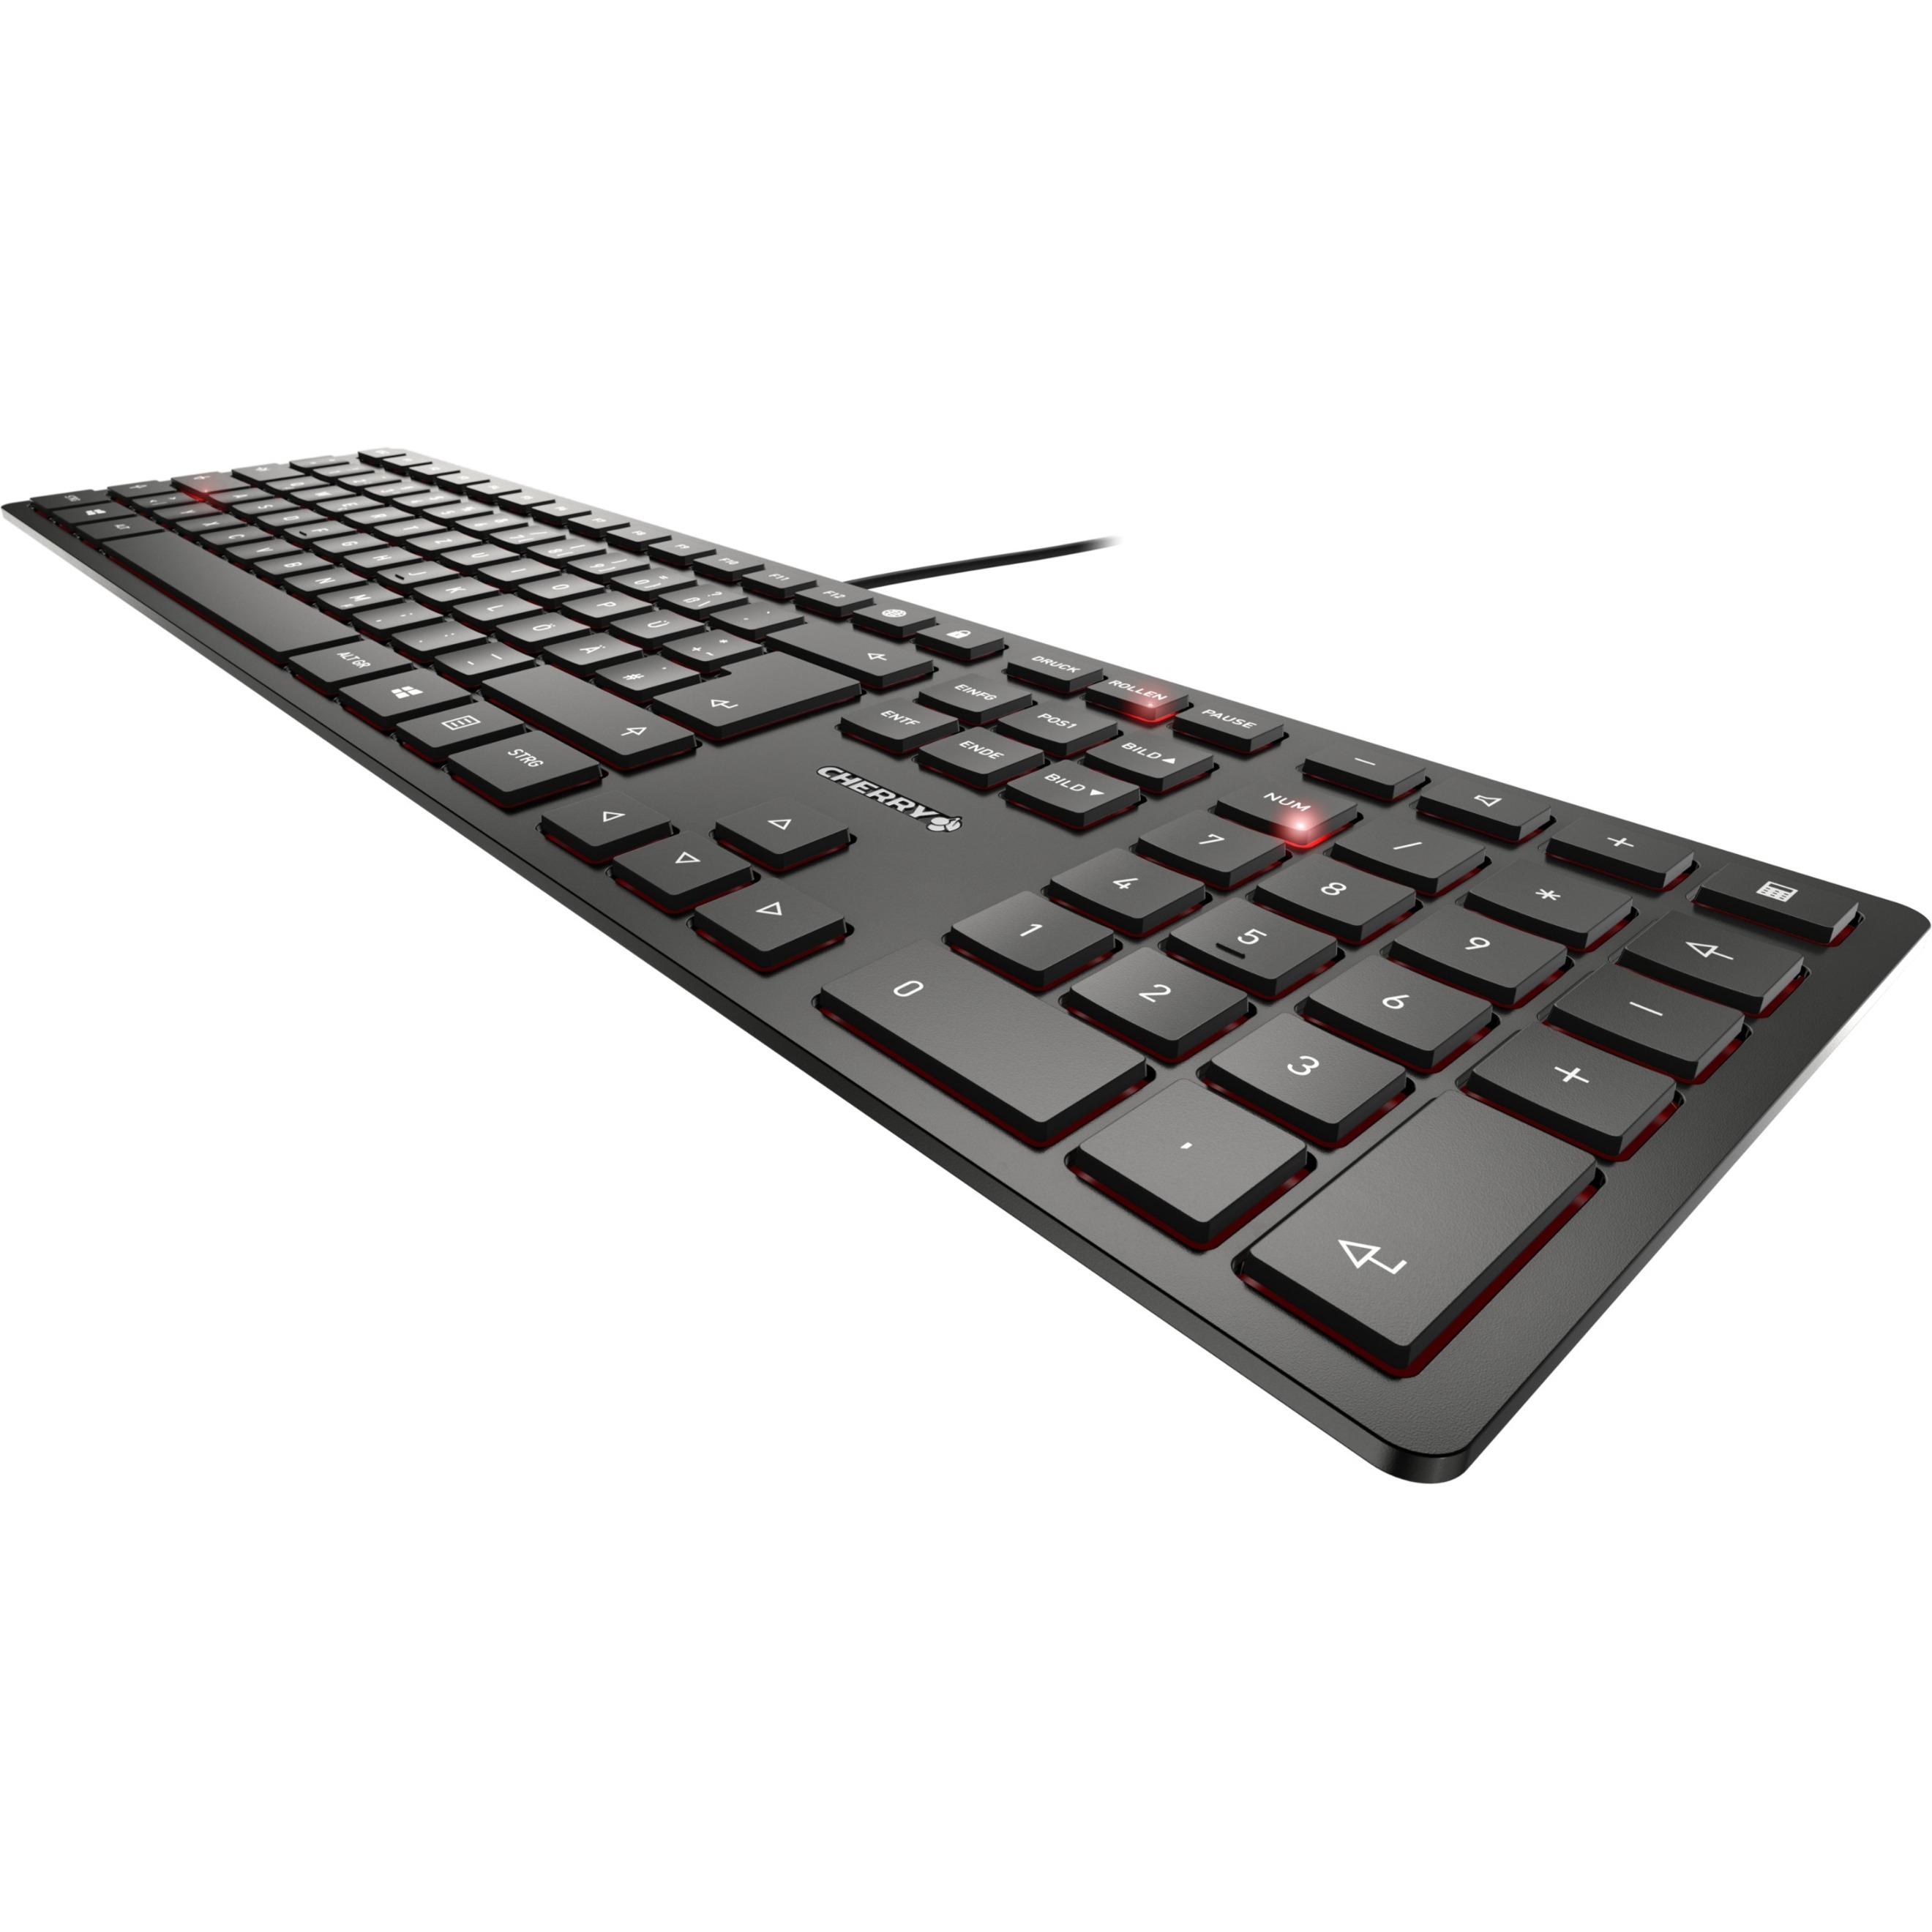 CHERRY KC 6000 SLIM Black Wired Keyboard - image 2 of 6